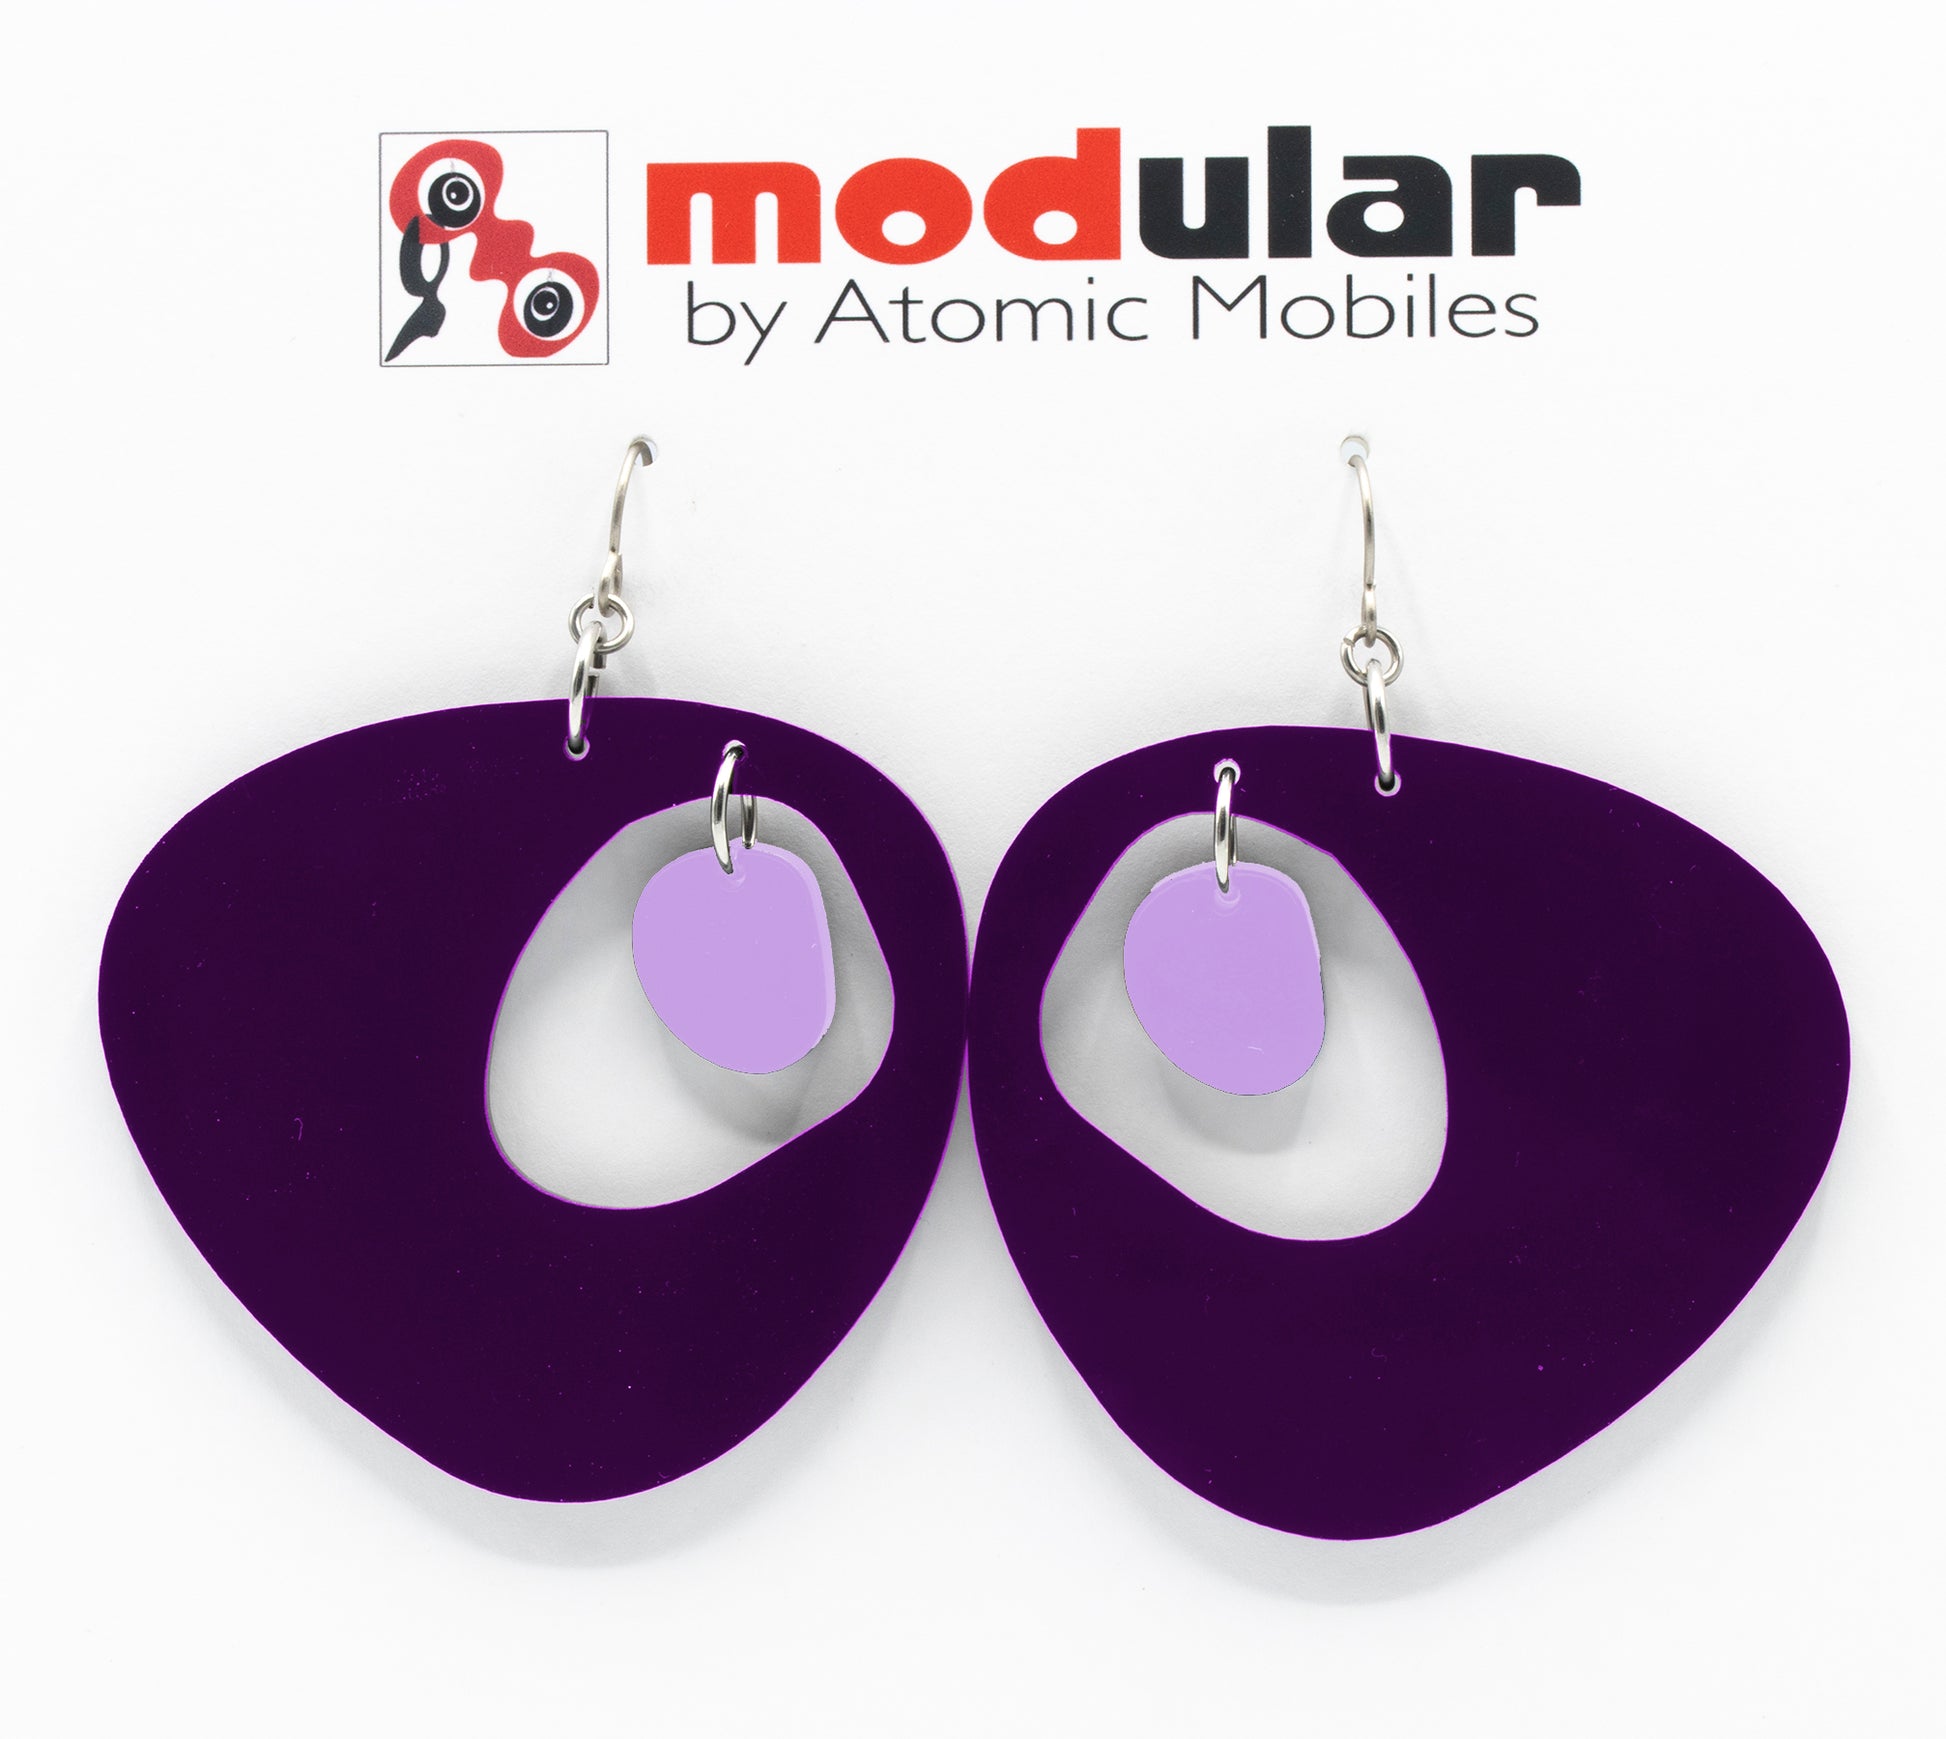 MODular Earrings - Boomerang Statement Earrings in Purple by AtomicMobiles.com - retro era inspired mod handmade jewelry